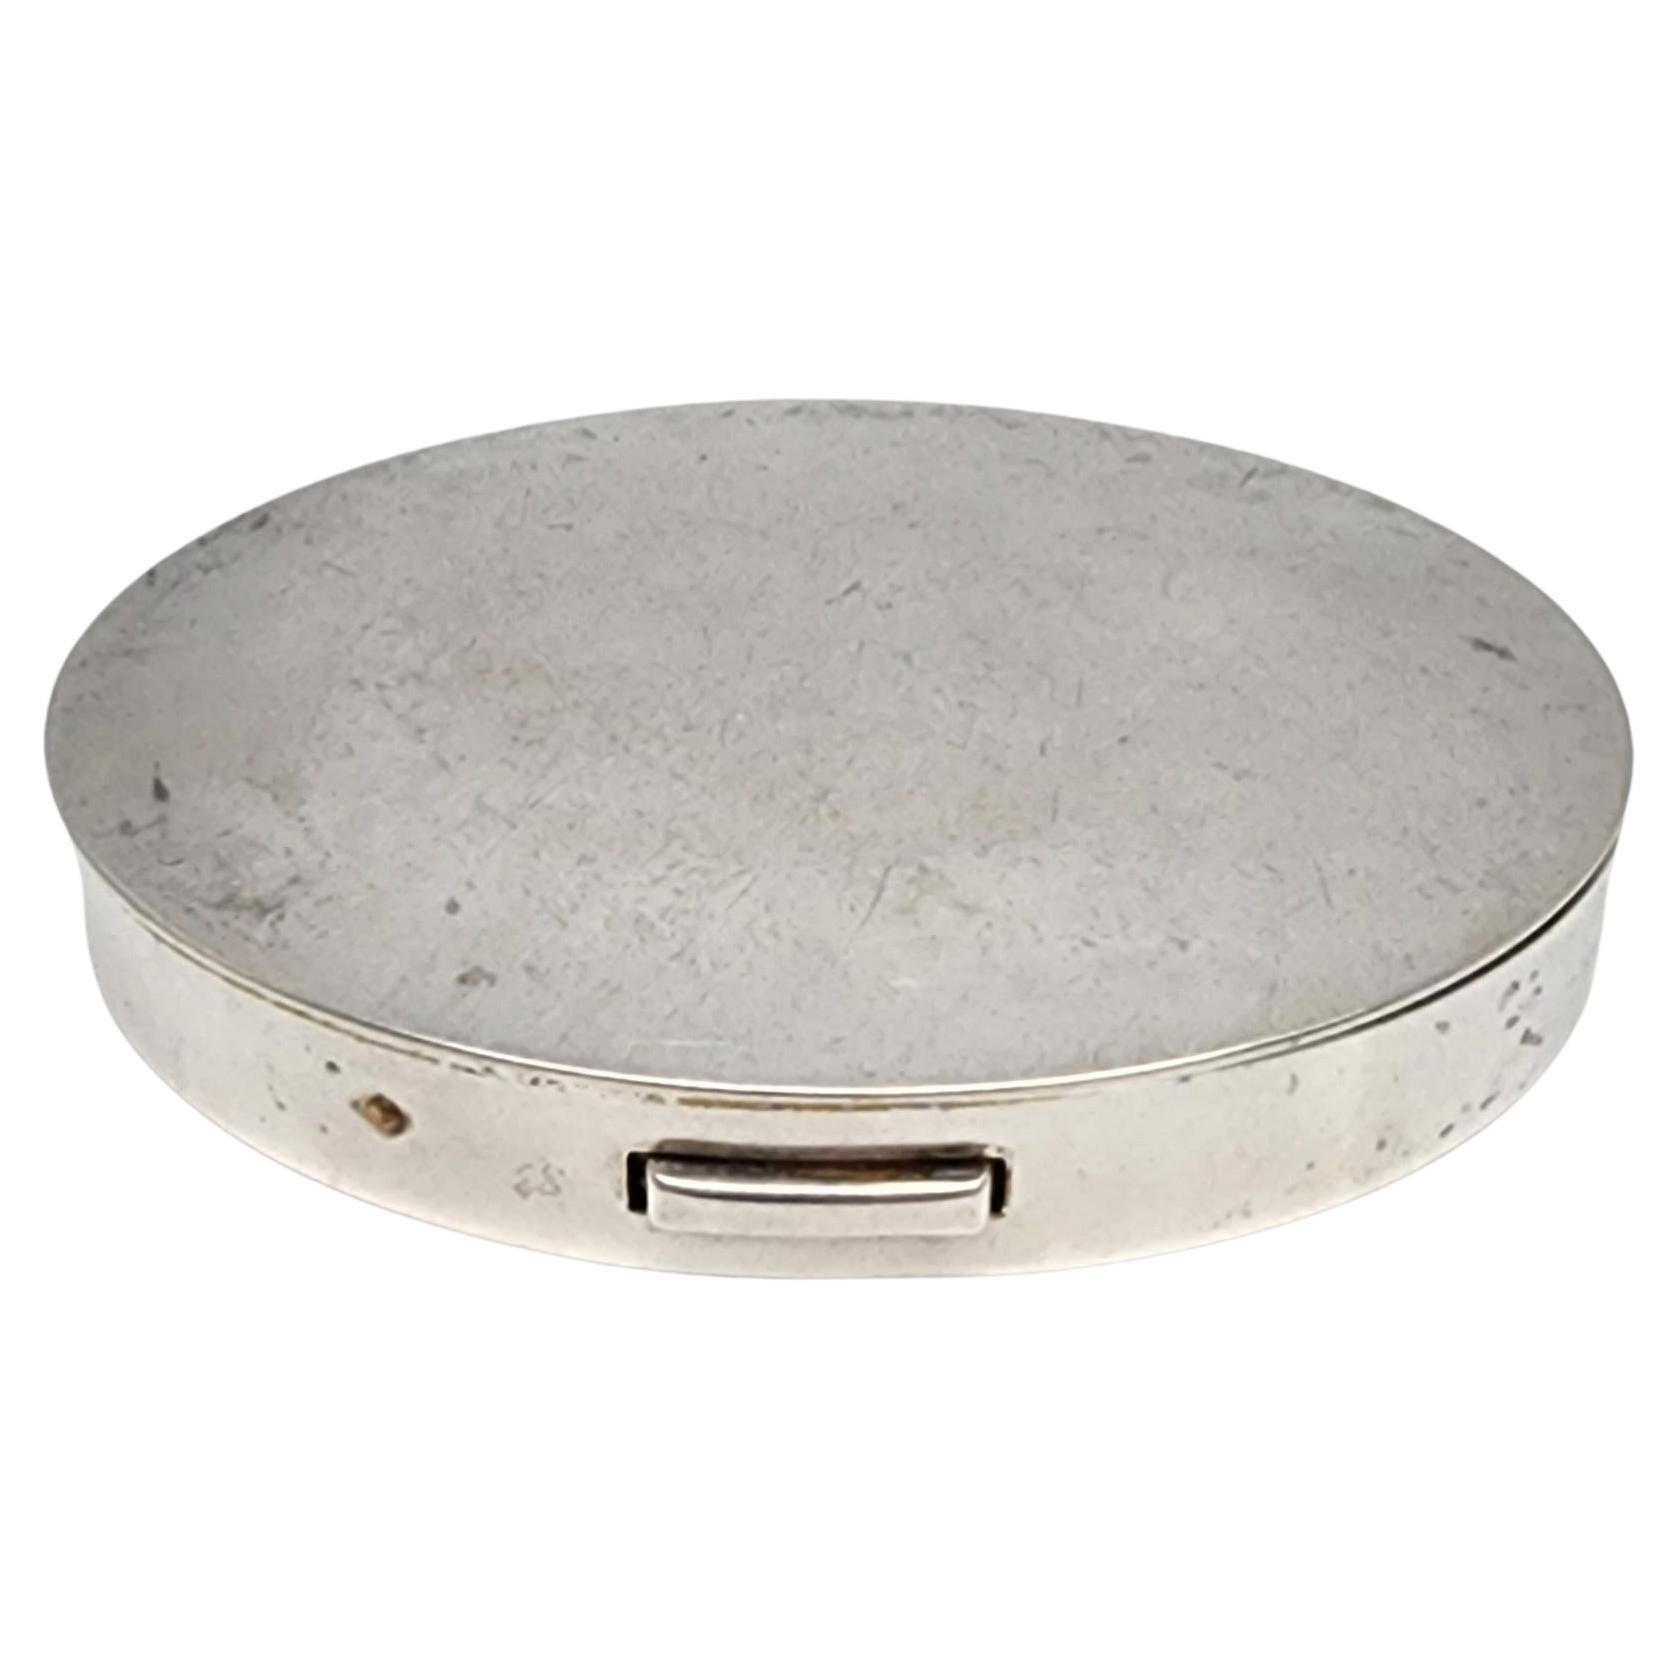 Dunhill Sterling Silber Oval Spiegel Kompakt #16887